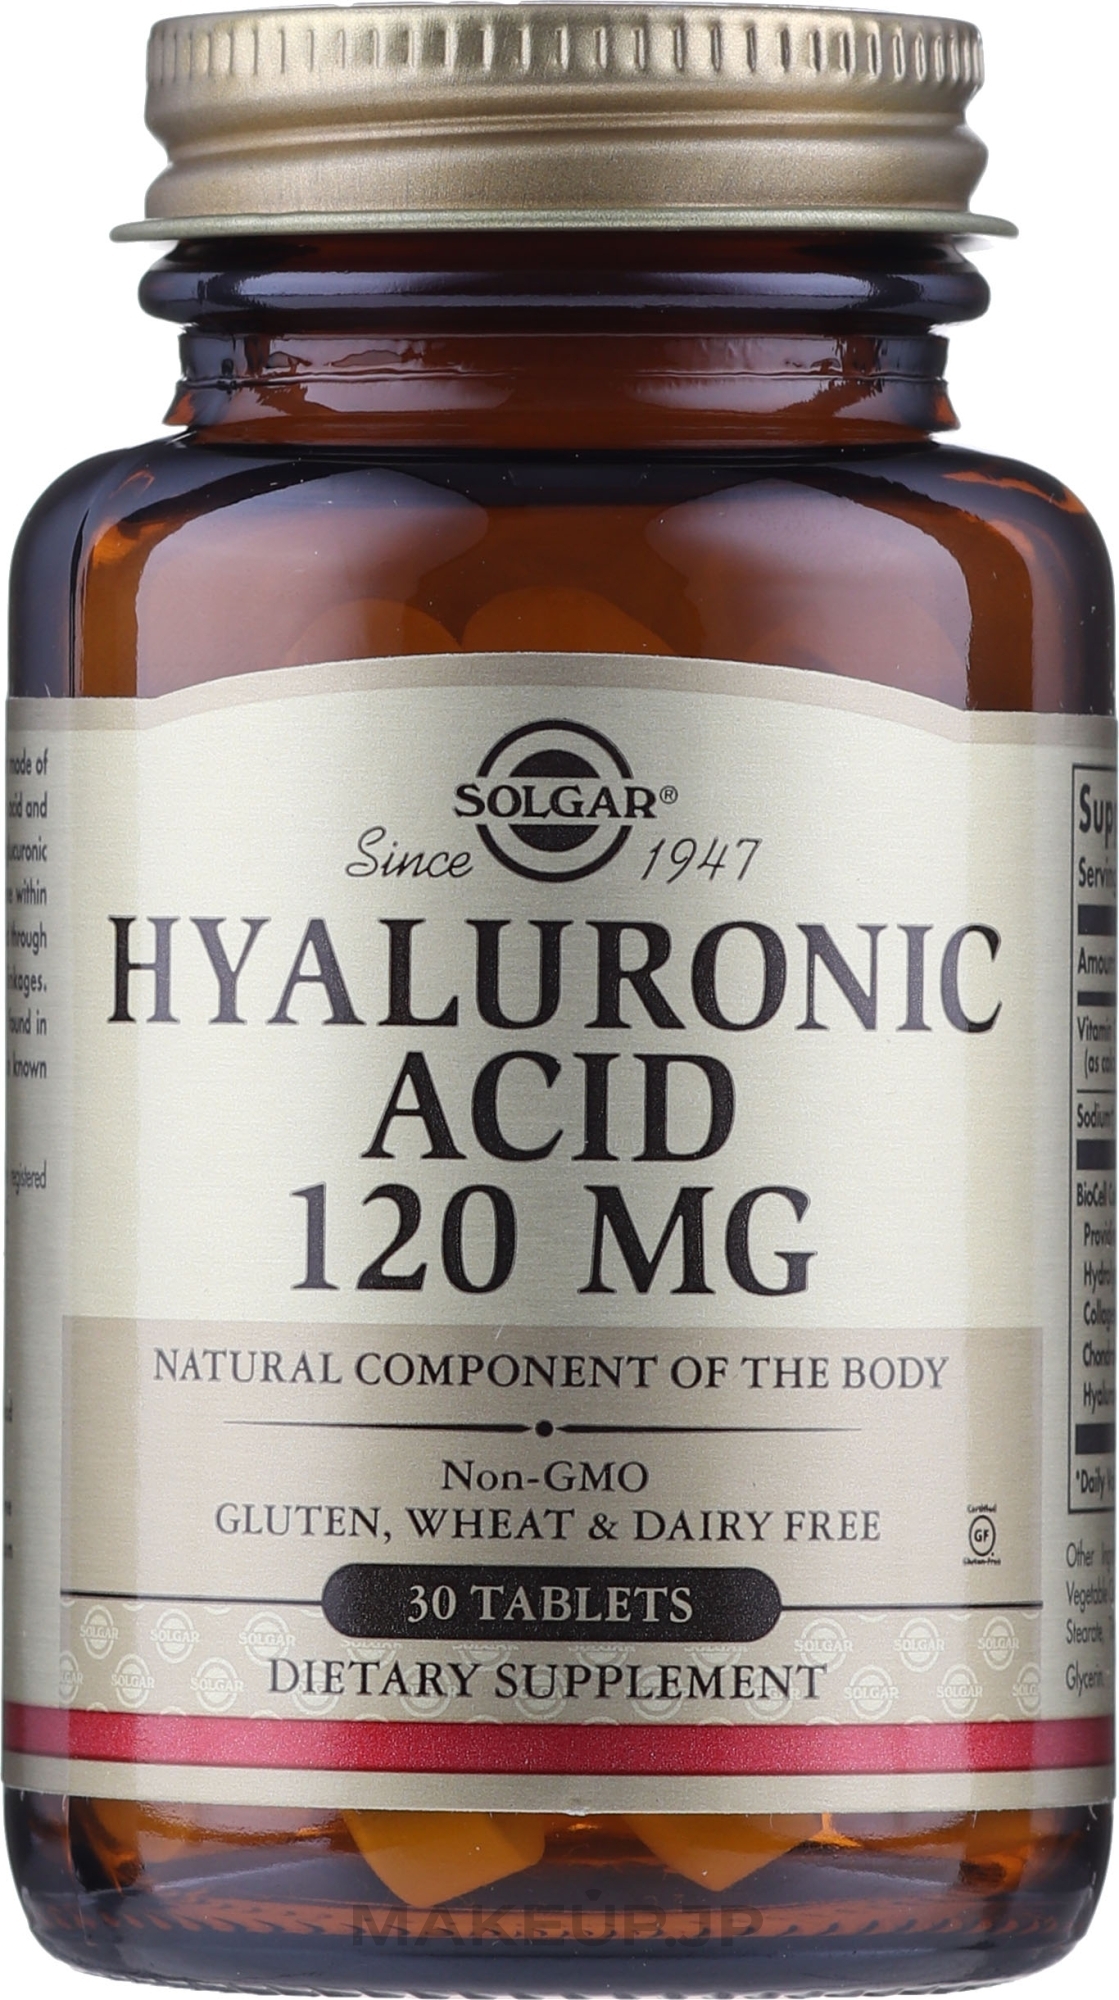 Dietary Supplement "Hyaluronic Acid" 120 mg - Solgar Hyaluronic Acid — photo 30 szt.